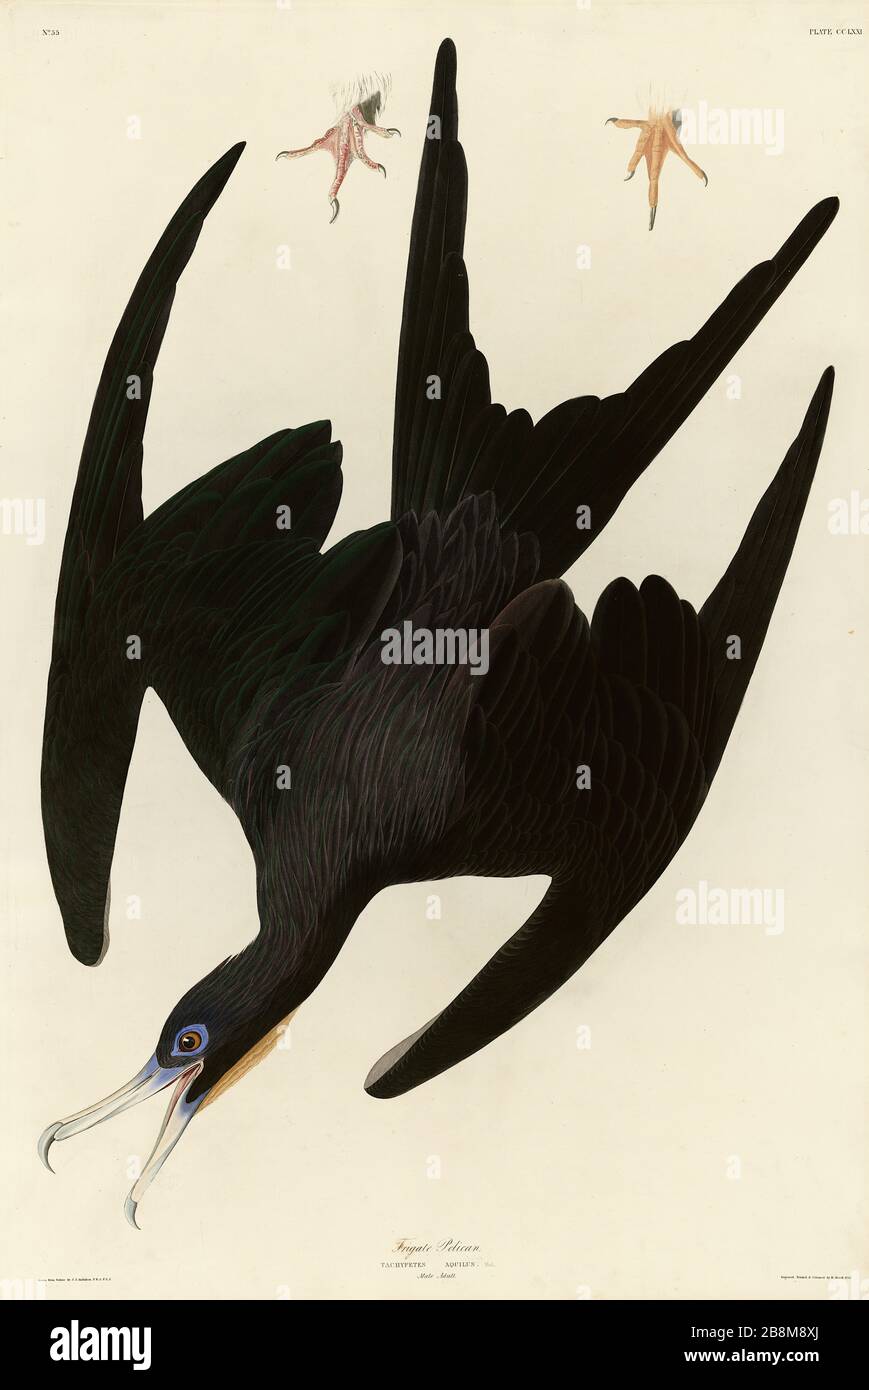 Plate 271 Frigate Pelican (Magnificent Frigorebird) The Birds of America (187-184) John James Audubon - sehr hochauflösendes, qualitativ hochwertiges Bild Stockfoto